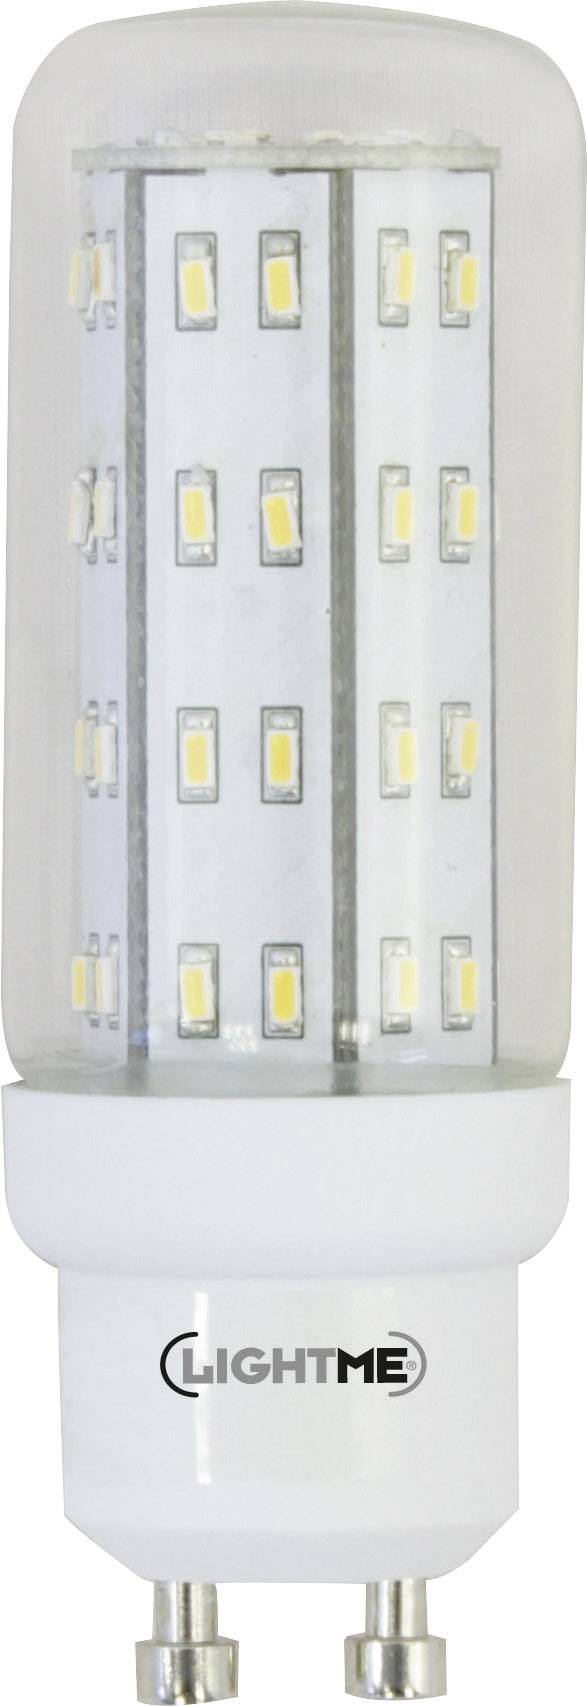 GU10 LED Lampe 12-24Volt Spannung: * 12-30 Volt (VDC) Leistung in